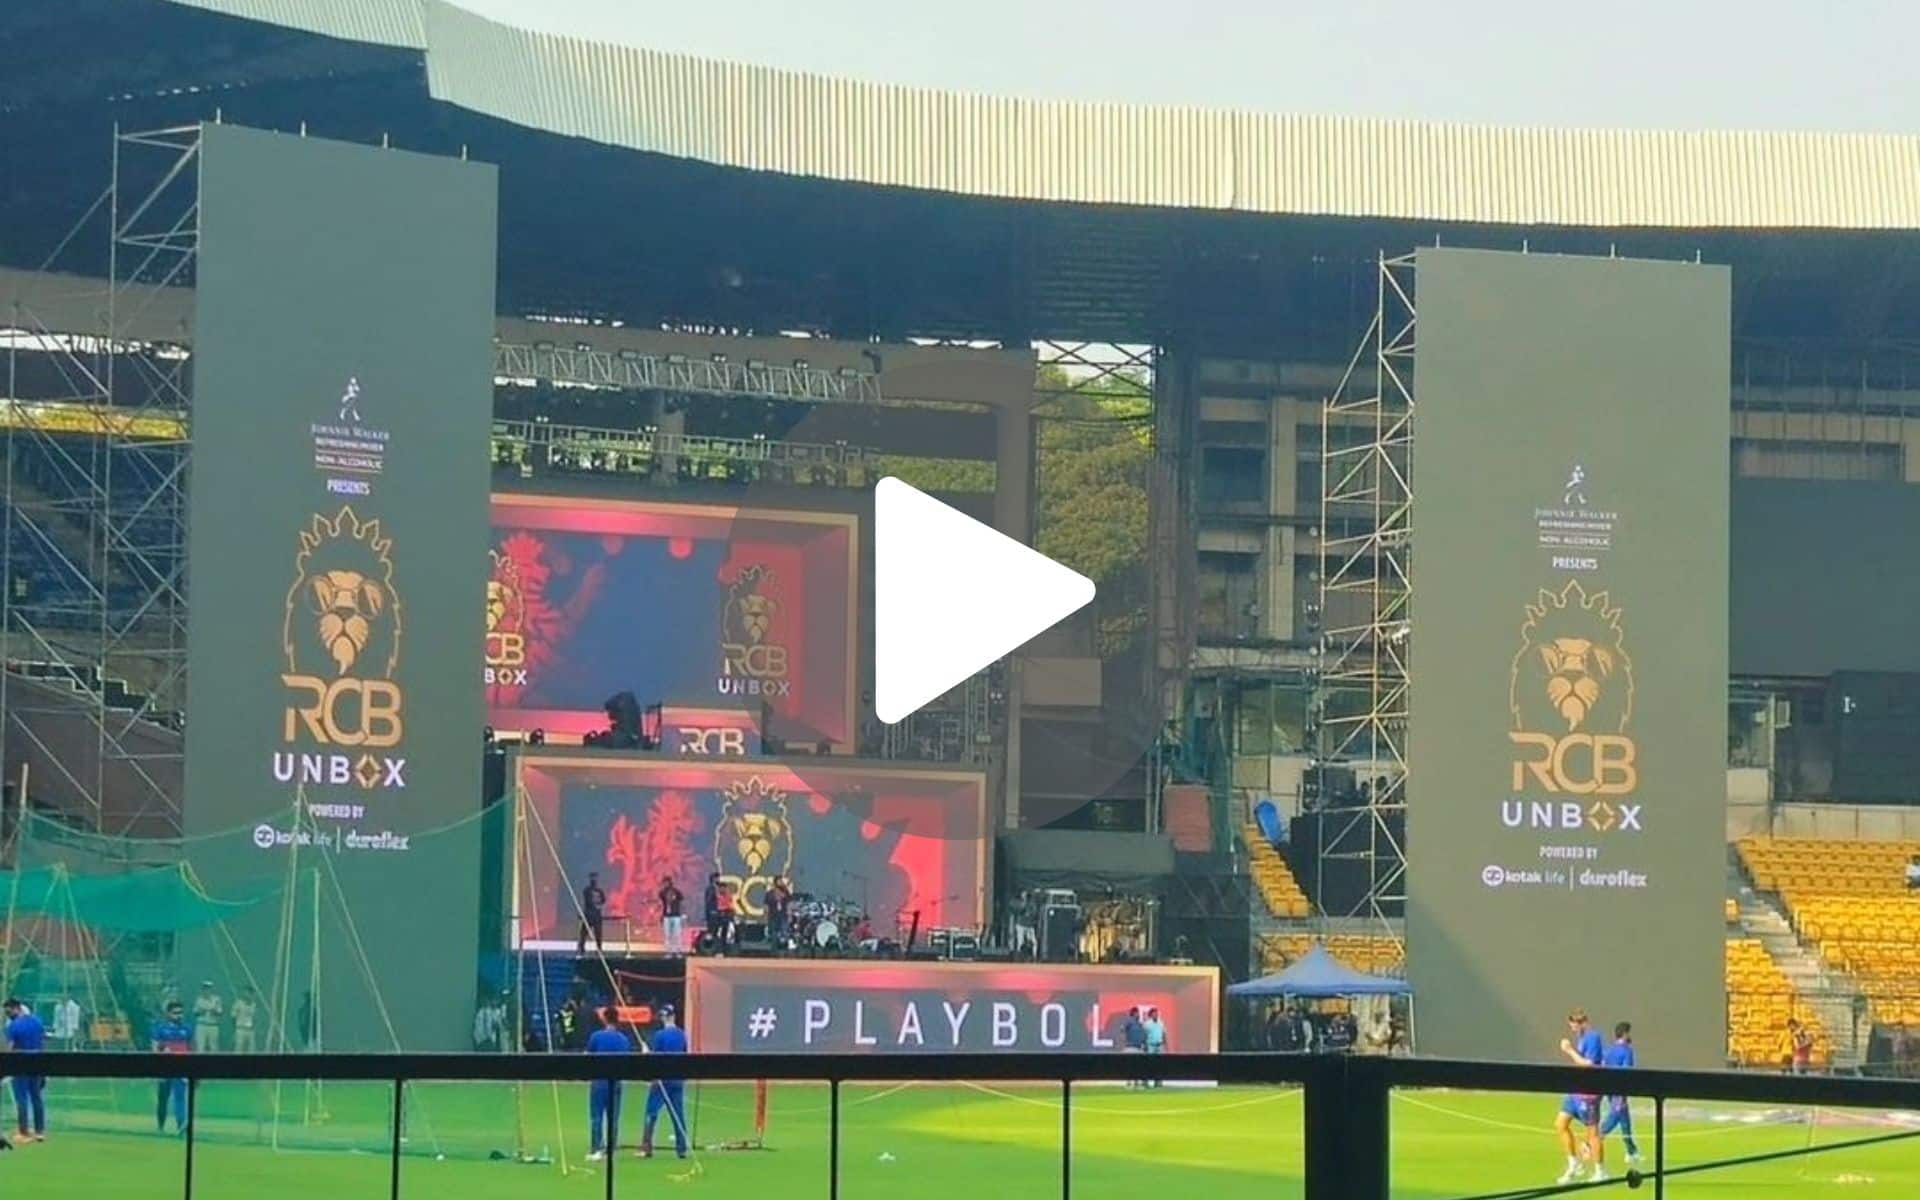 [Watch] Fans Gather Around Chinnaswamy Stadium Hours Before The RCB Unbox Event